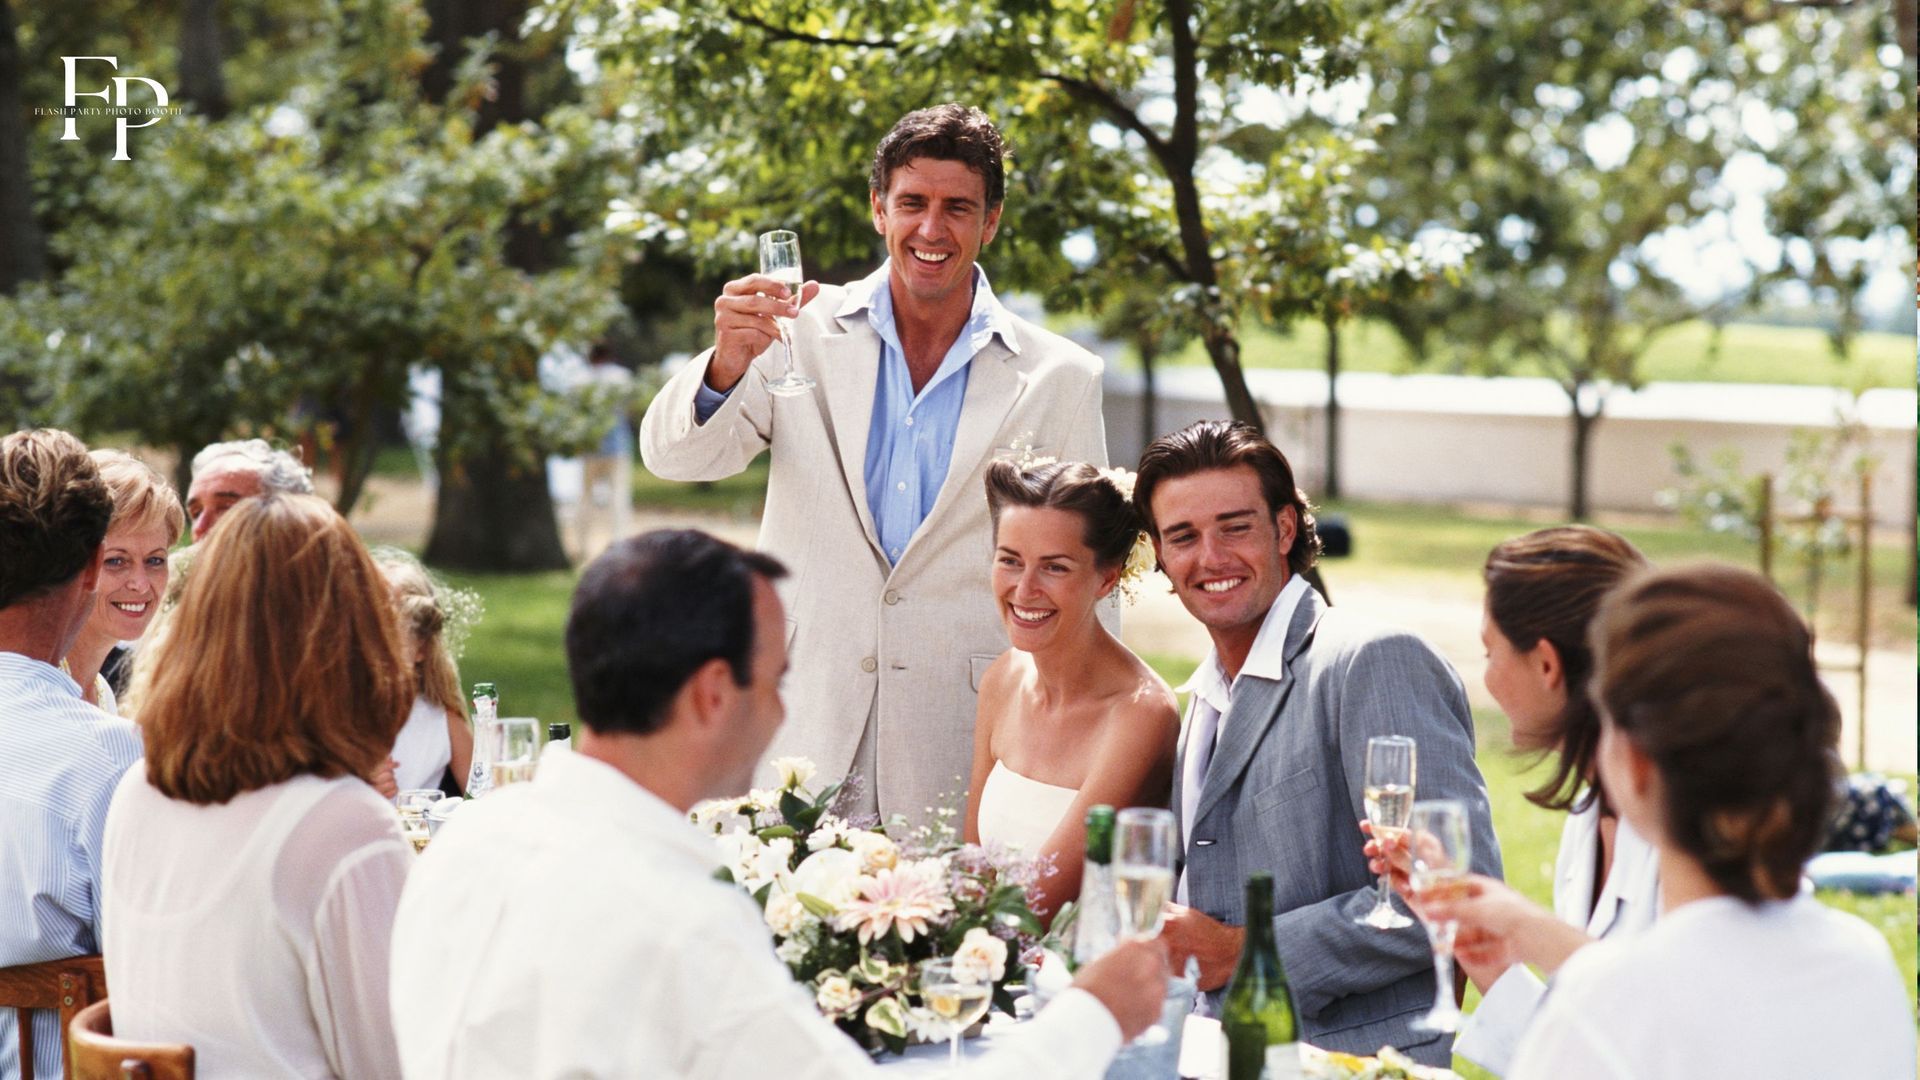 San Antonio groom aising his glass in a heartfelt toast.